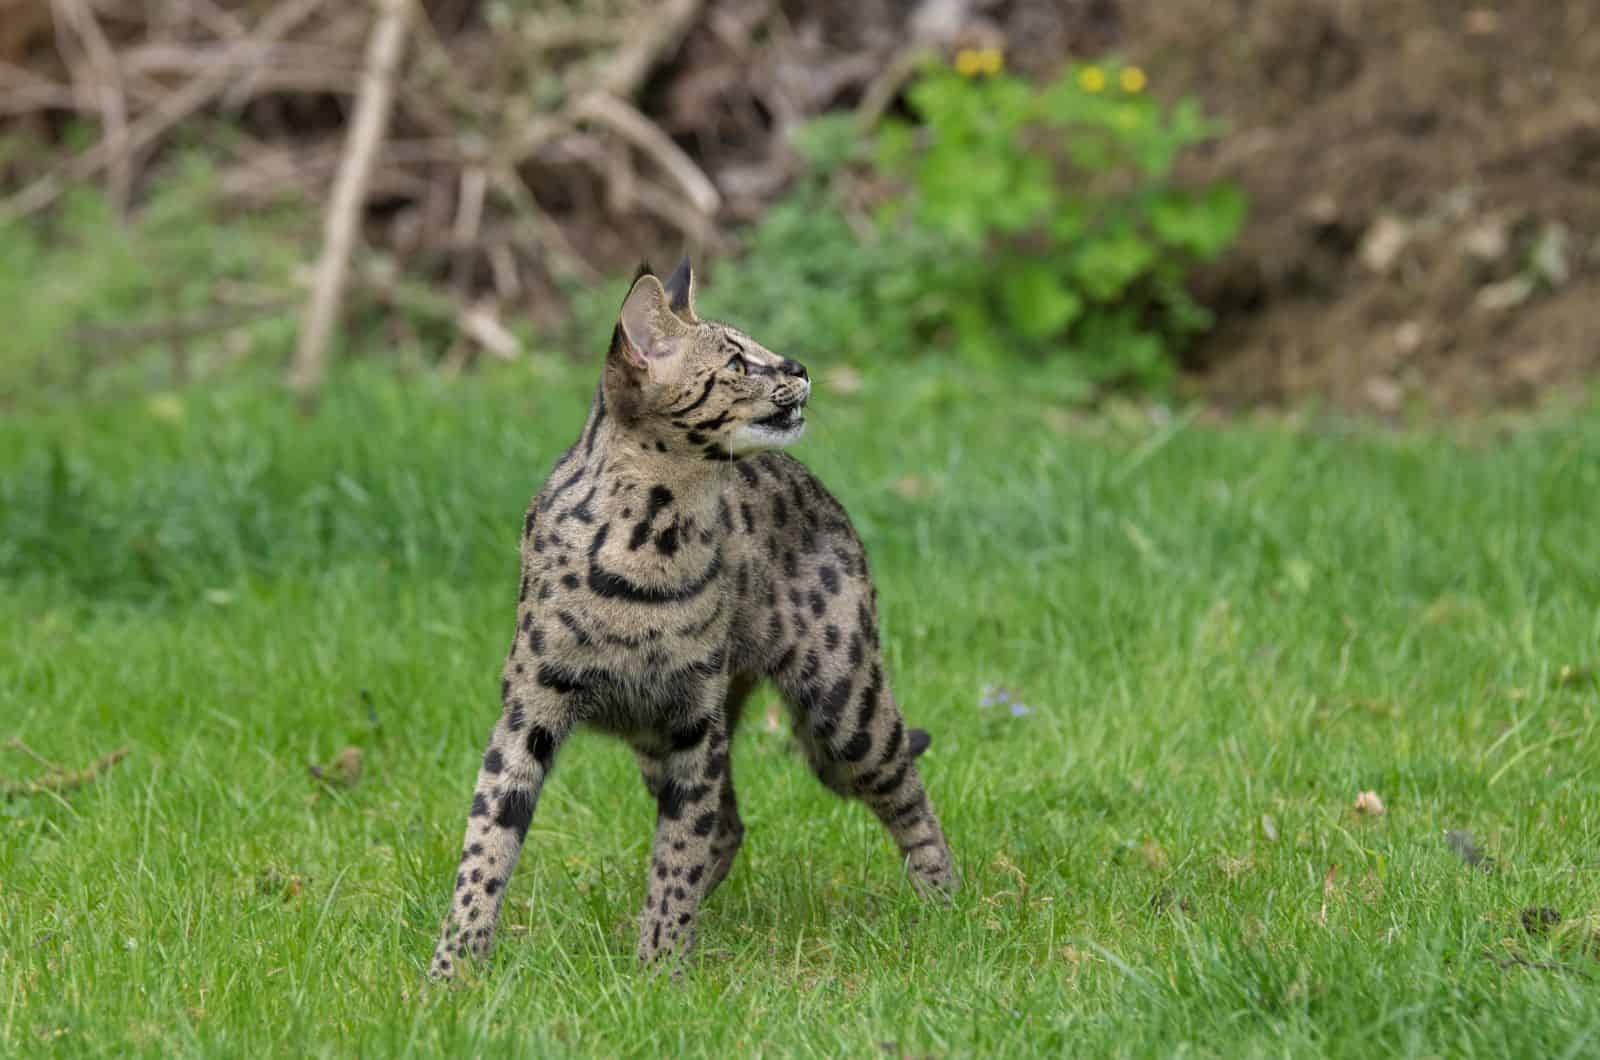 Savannah Cat walking on grass